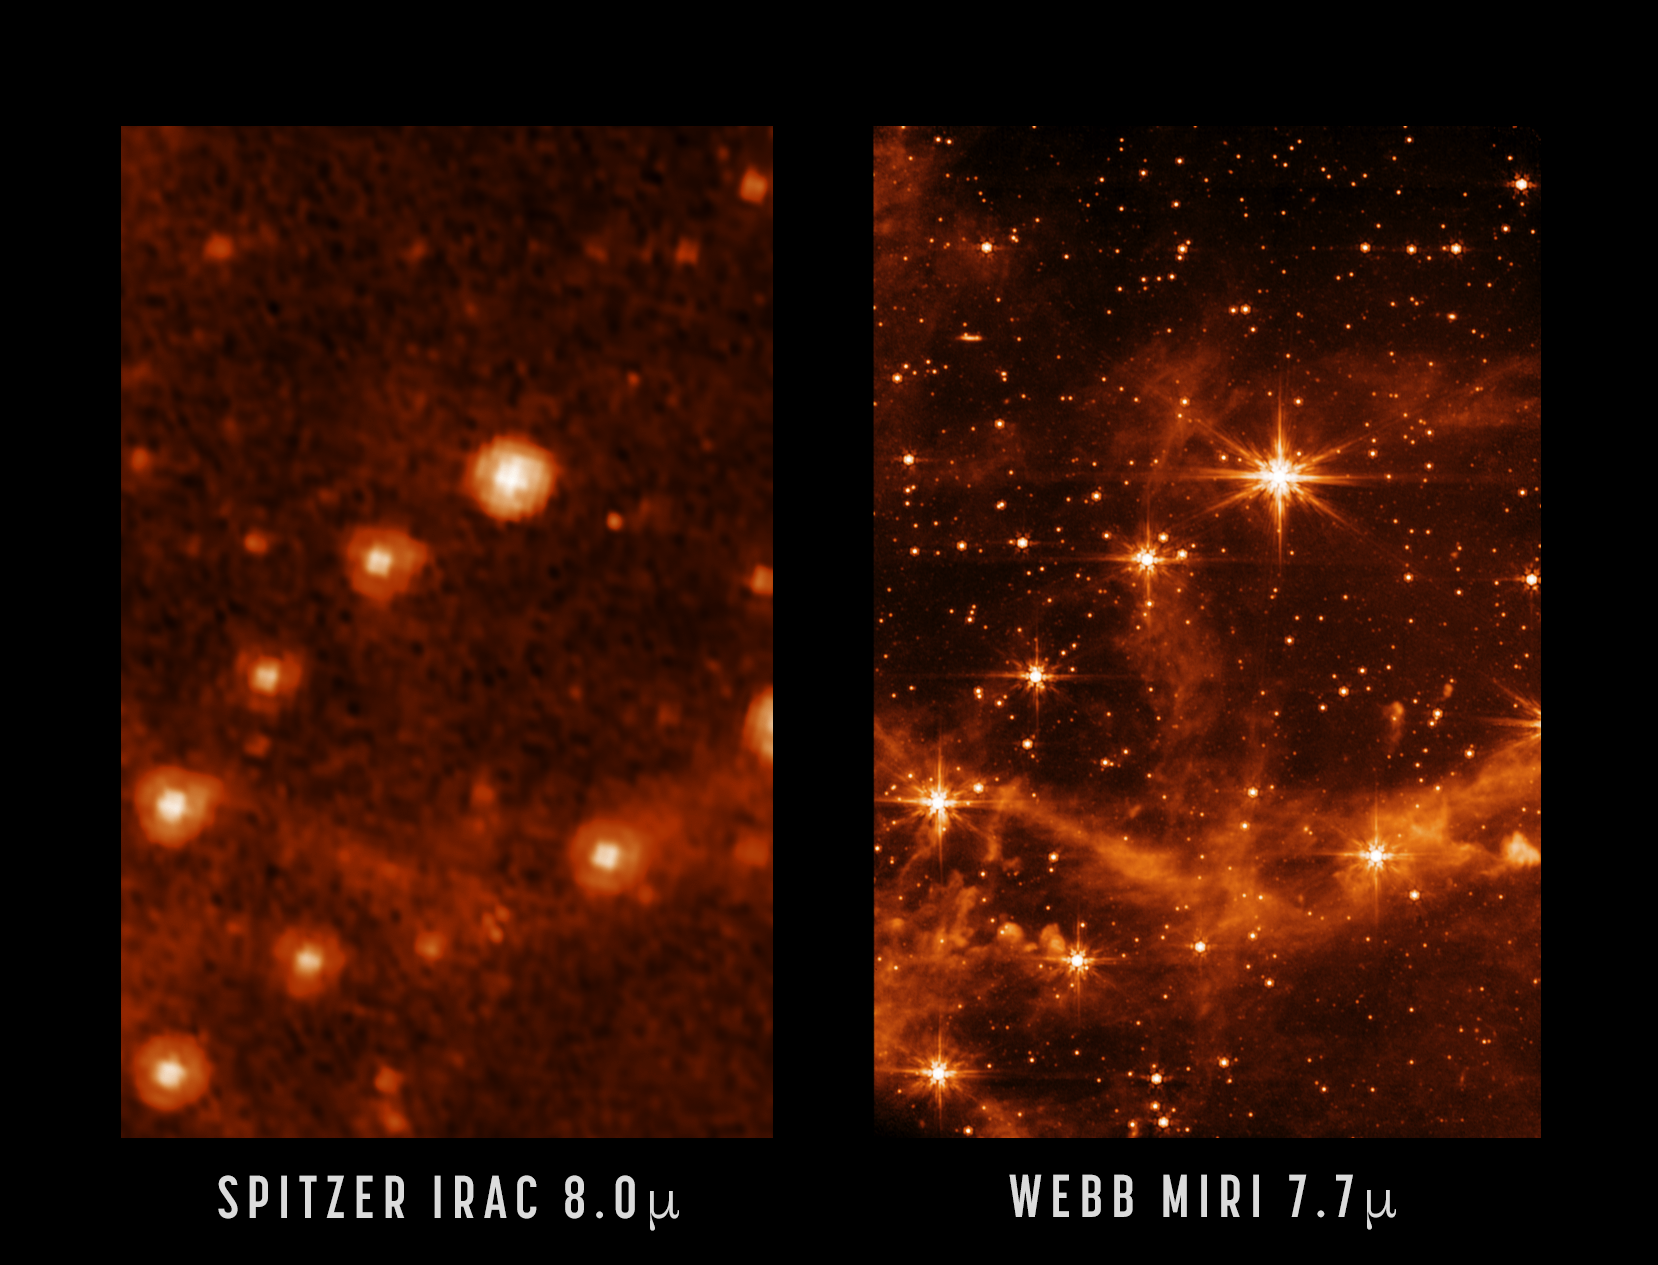 James Webb Space Telescope observations to change astronomy forever – (NASA/JPL-Caltech [left], NASA/ESA/CSA/STScI [right])